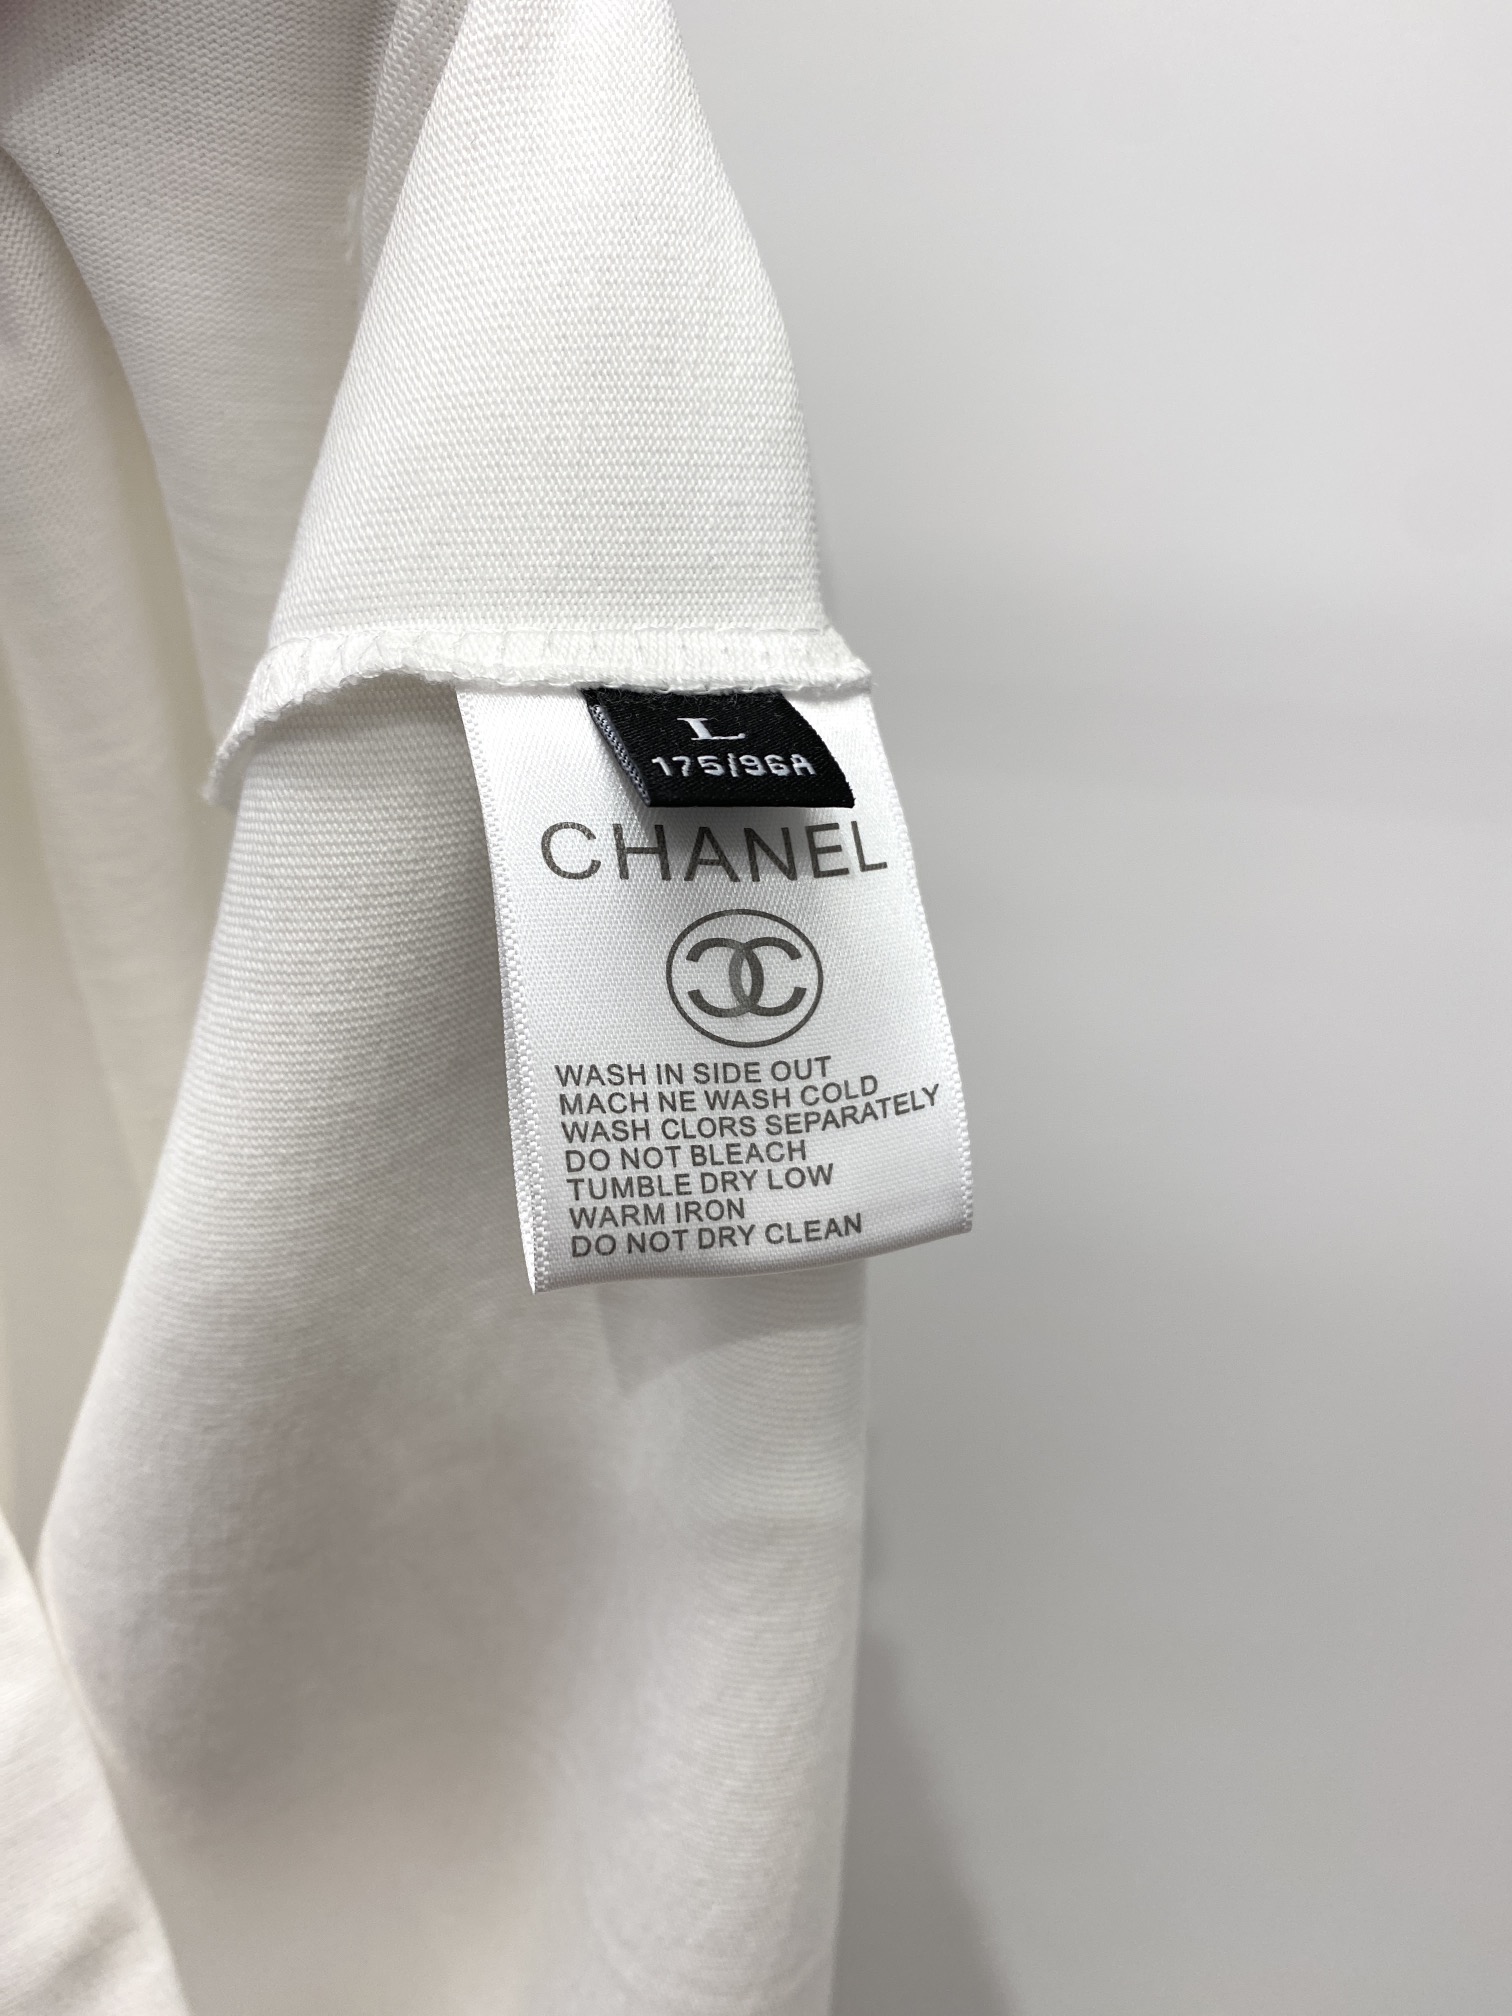 chanel t シャツ メンズ偽物 純綿 トップス ゆったり 短袖 プリント シンプル ファッション ホワイト_2